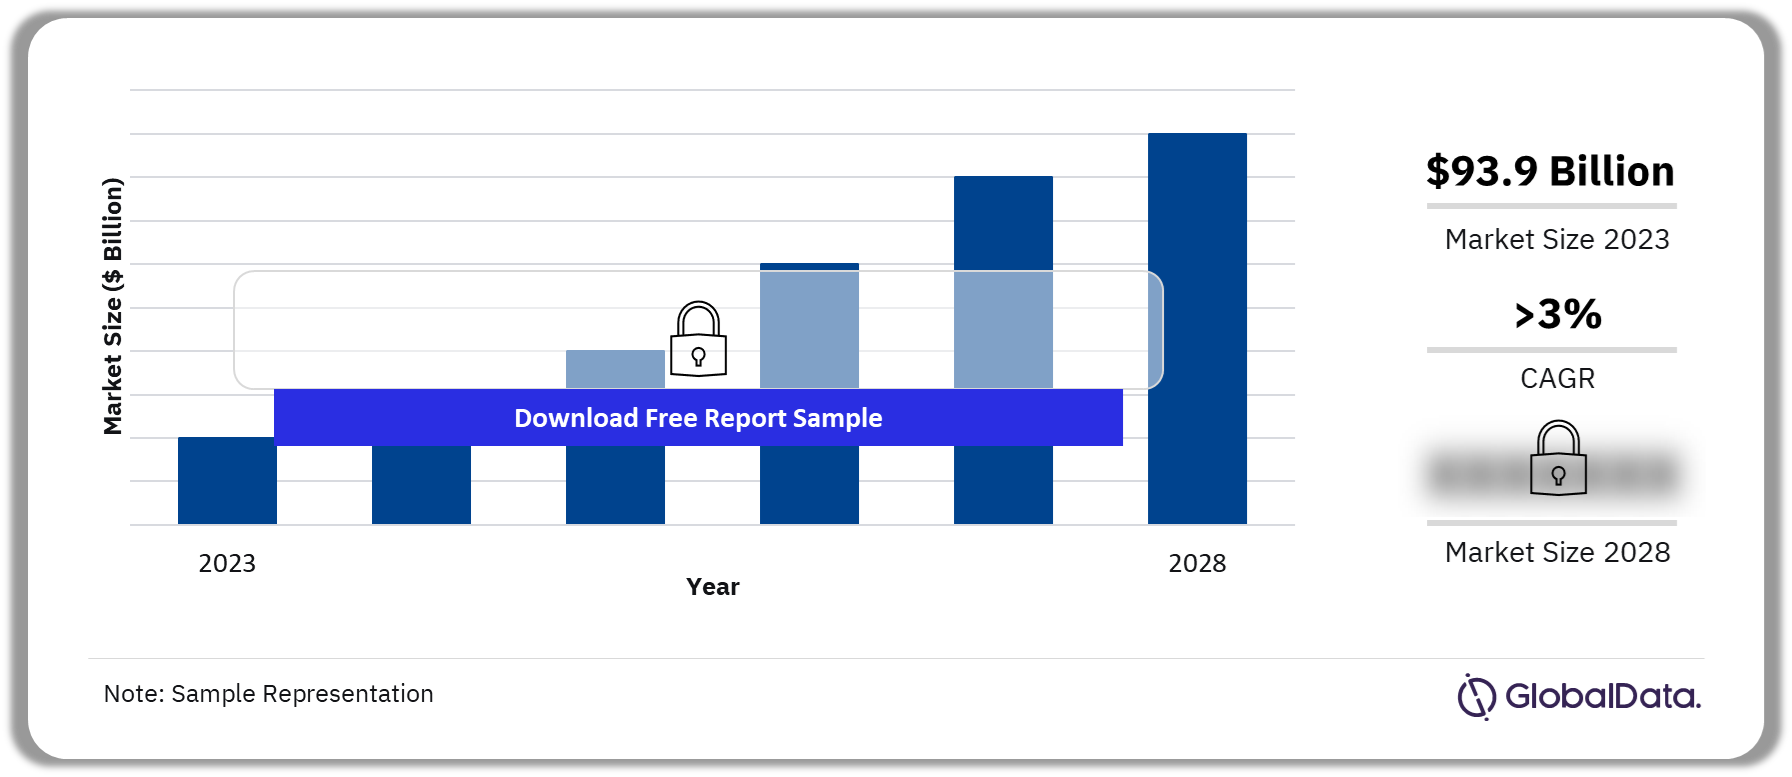 MEA Mobile Broadband Market Outlook 2023-2028 ($ Billion)